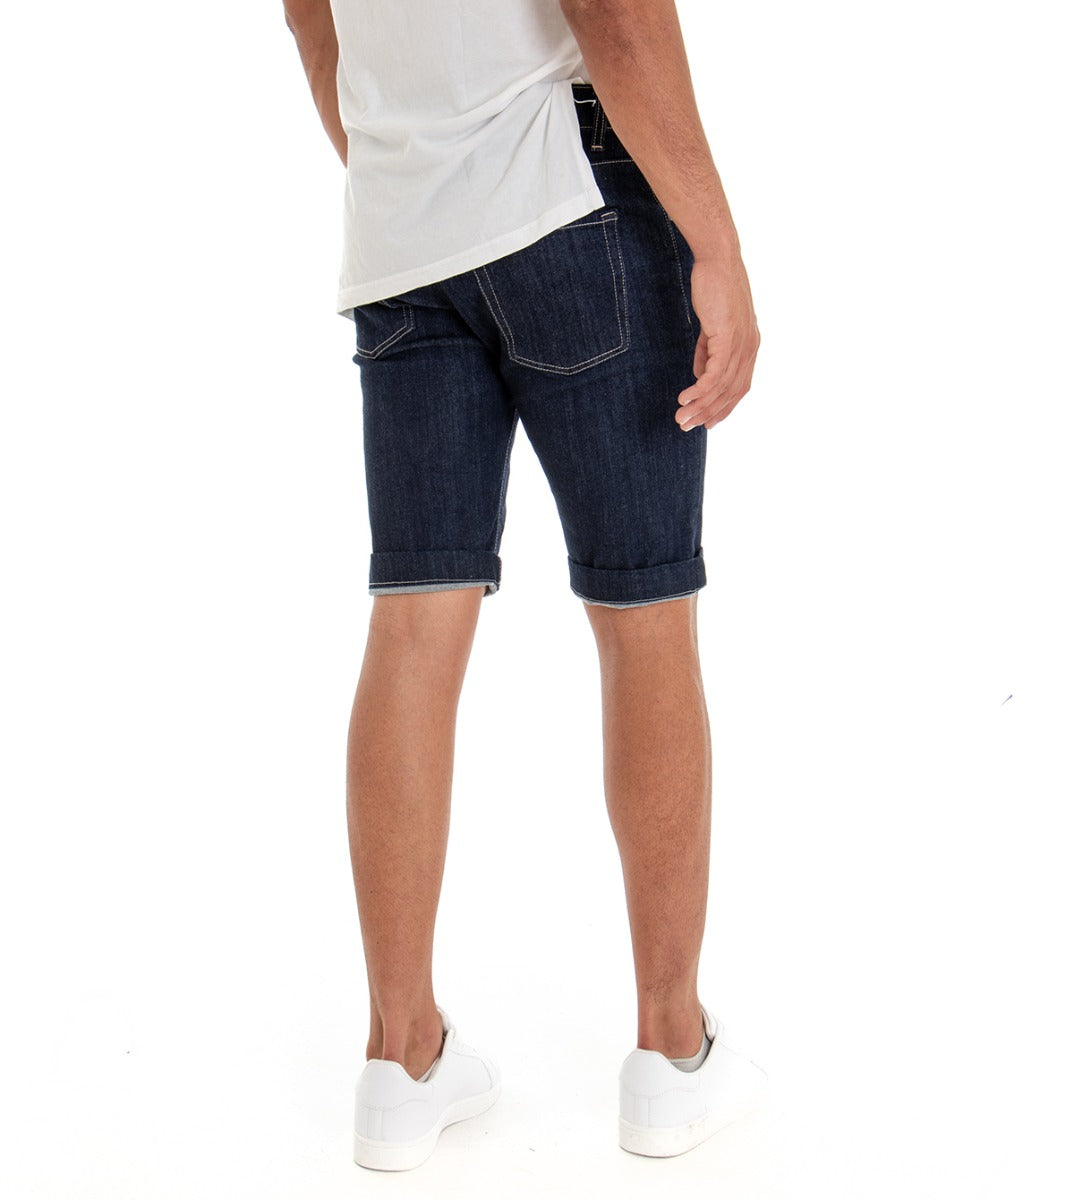 Bermuda Pantaloncino Uomo Denim Scuro Jeans Slim Fit Cinque Tasche Basic GIOSAL-PC1576A